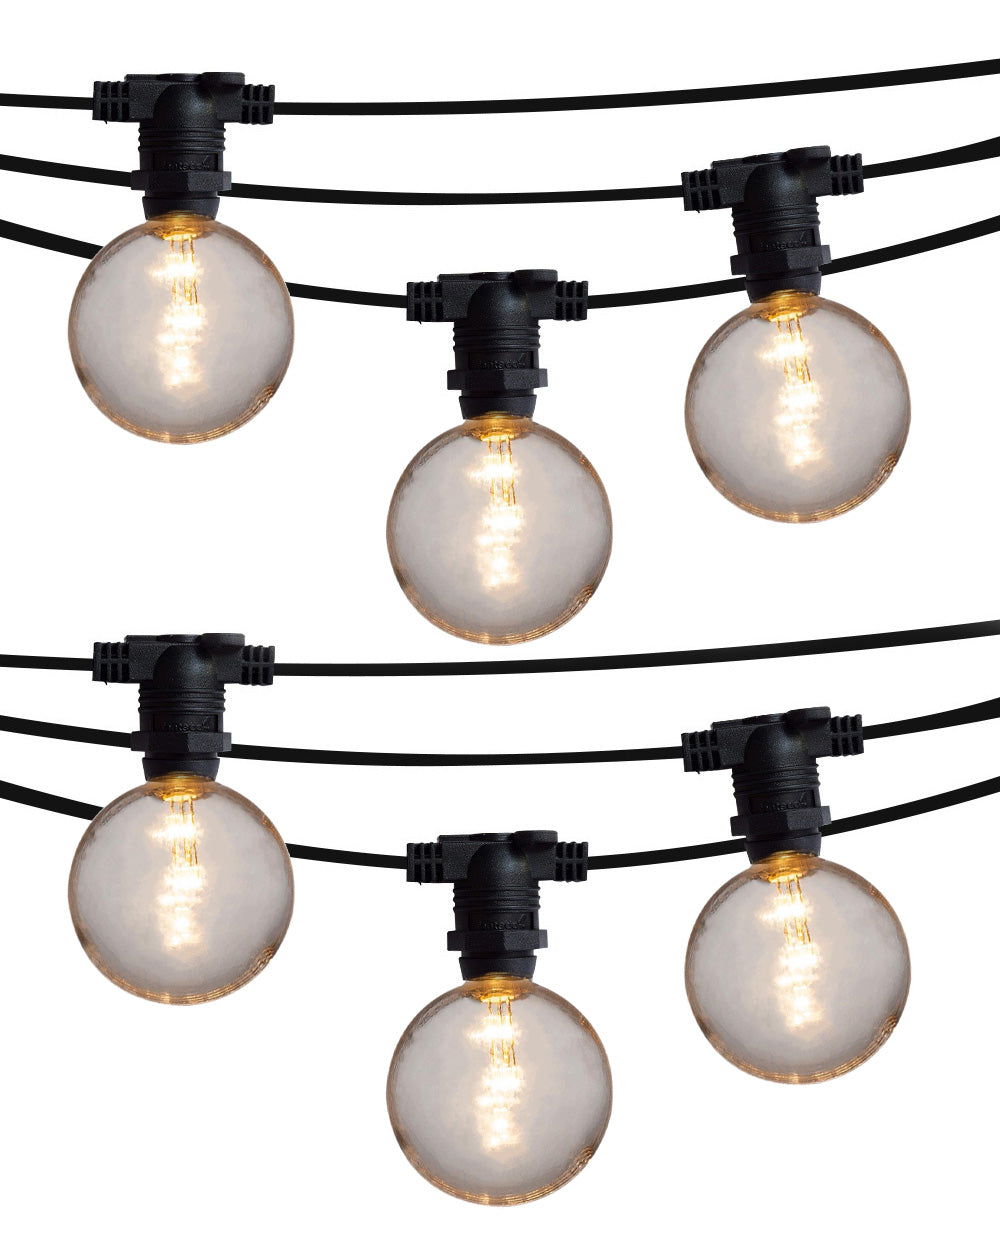 50 Socket Outdoor Commercial String Light Set, Shatterproof LED Bulbs, 54 FT Black Cord w/ E12 C7 Base, Weatherproof